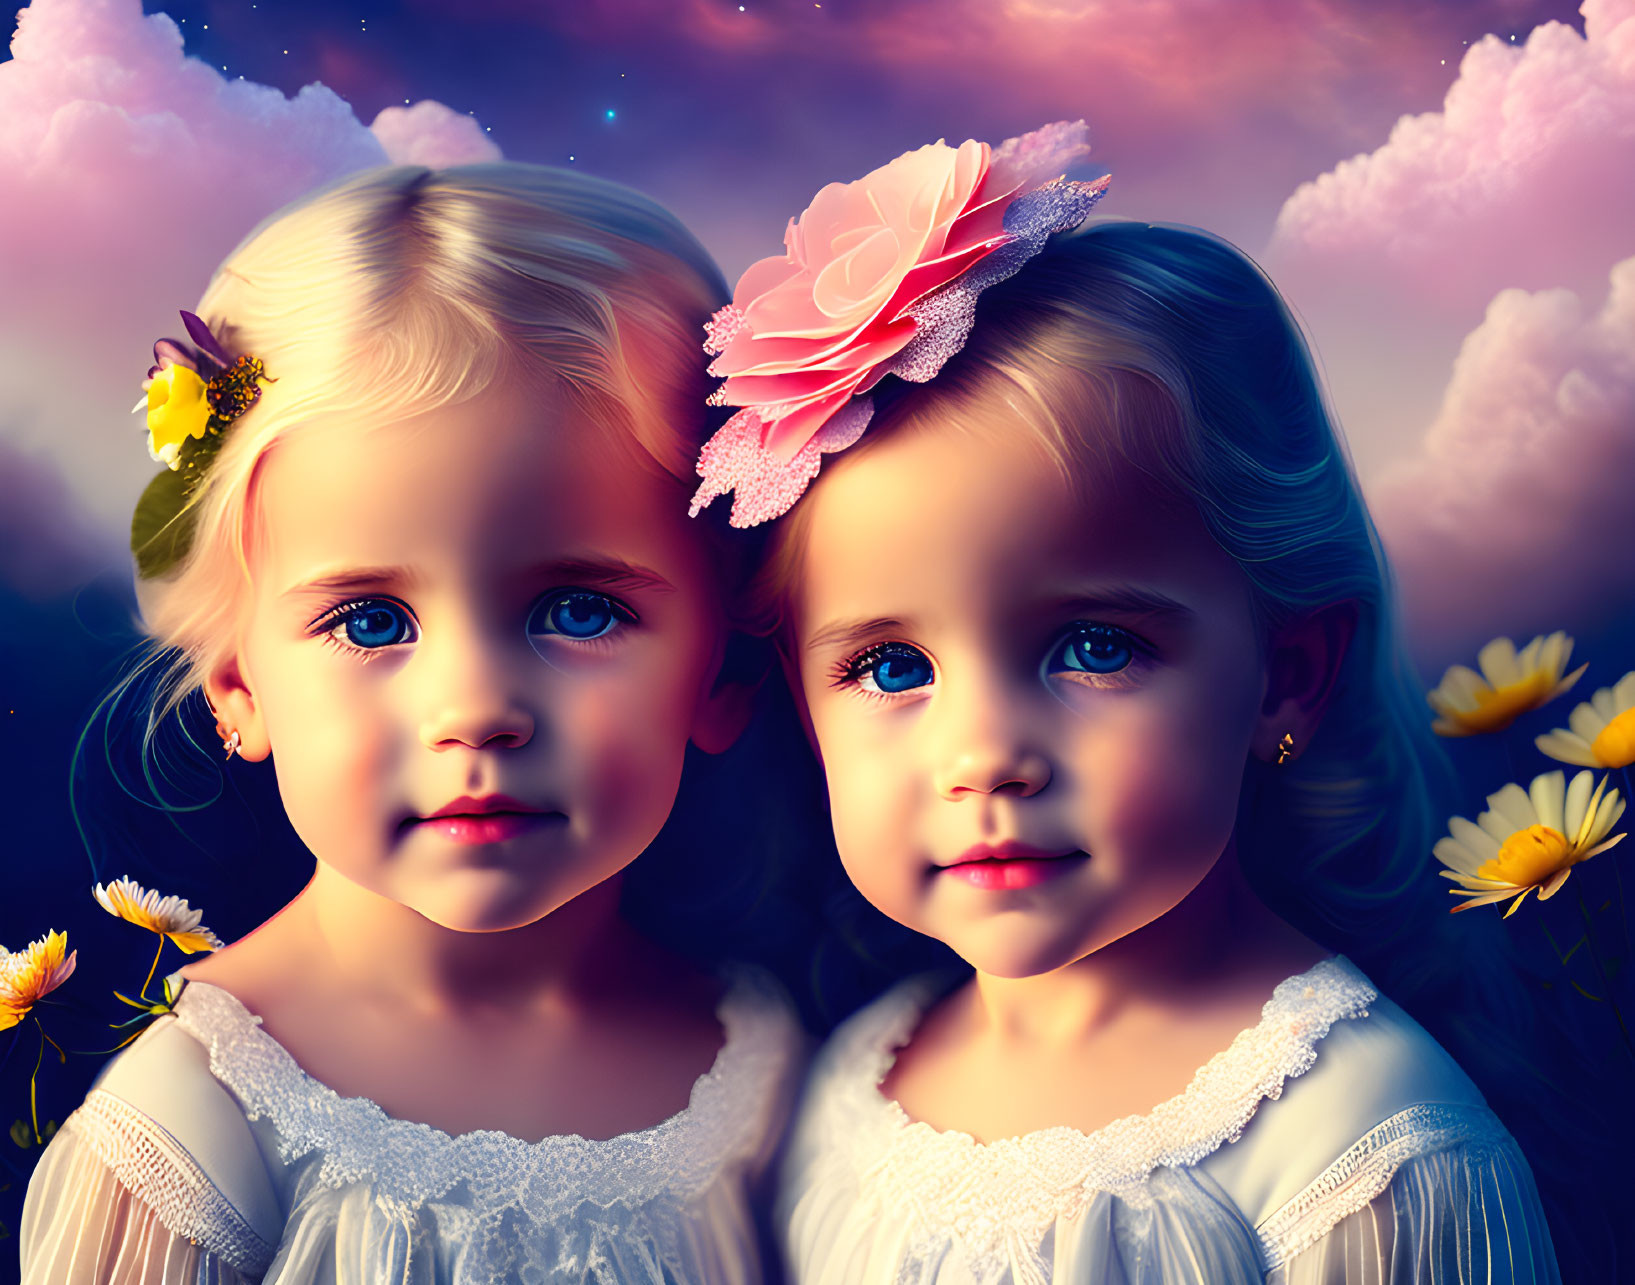 Twin girls digital art: blue-eyed, flower-adorned, dreamy sky background.